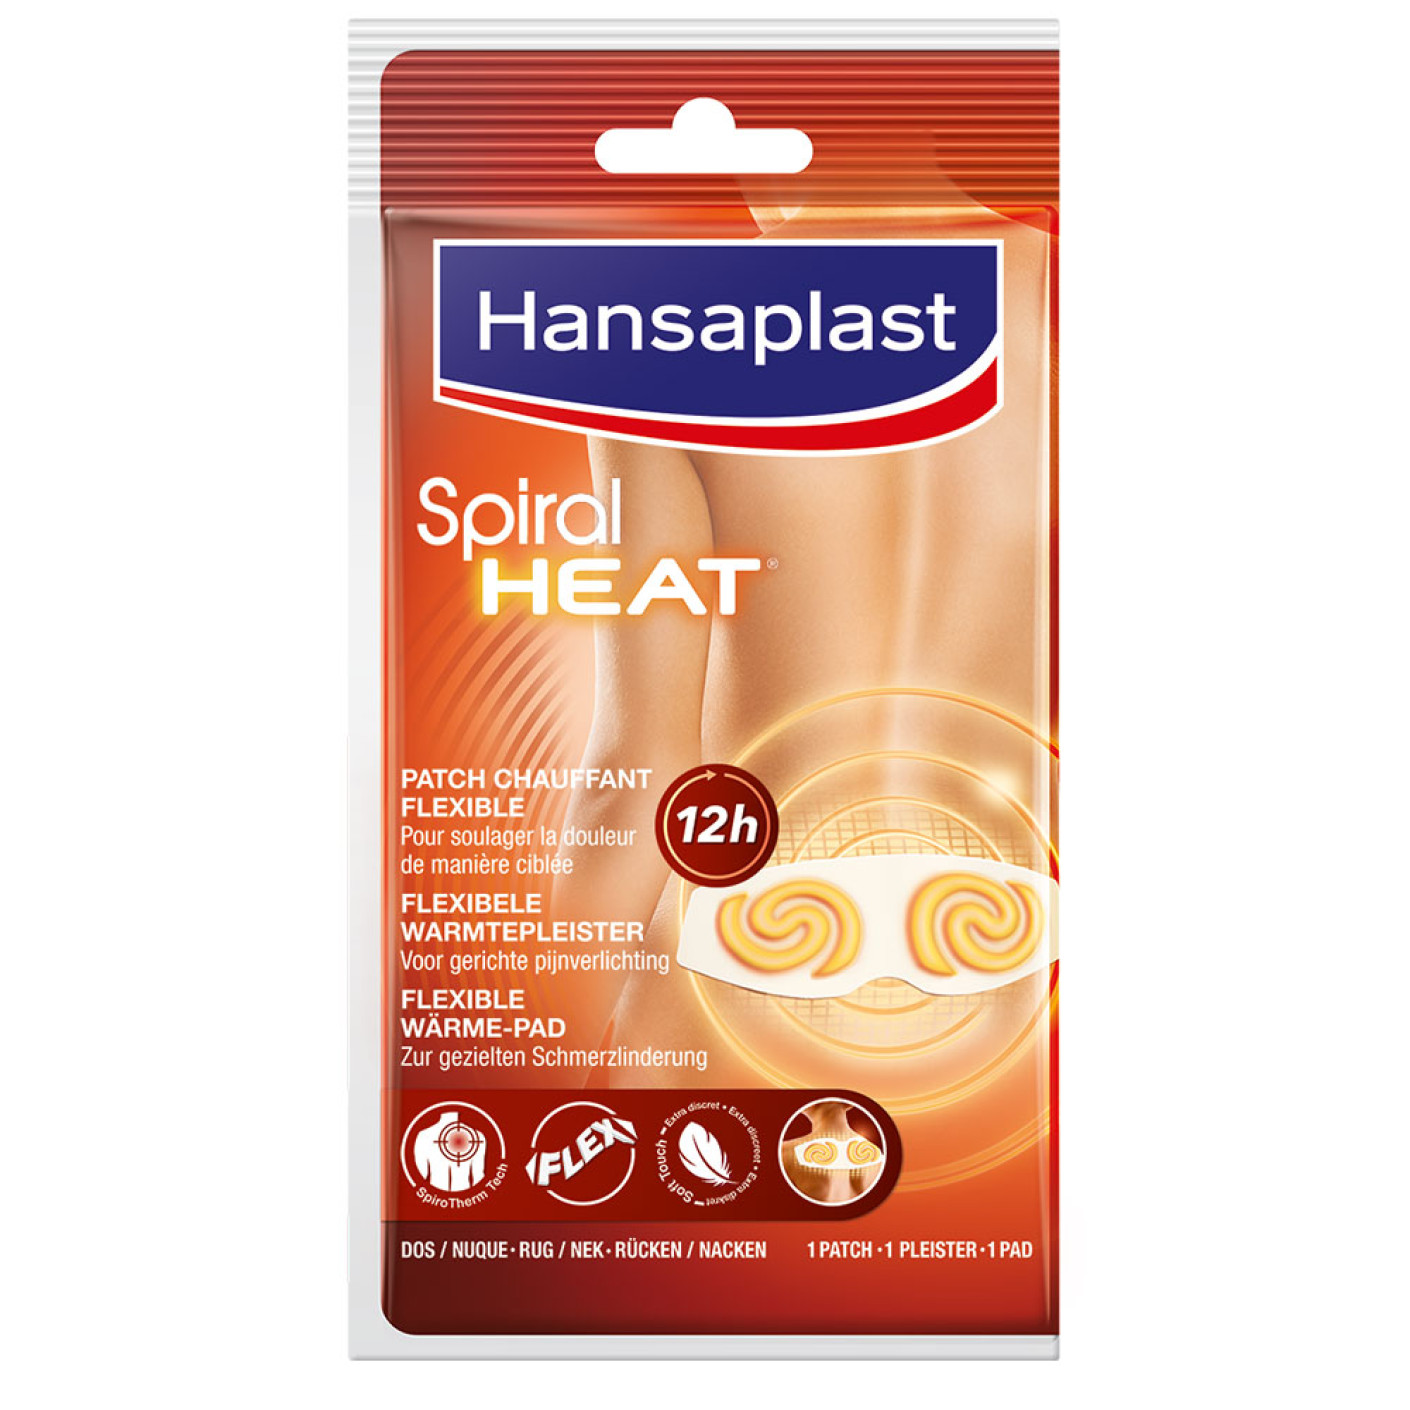 Hansaplast Spiral Heat Rug/Nek 1 stuk